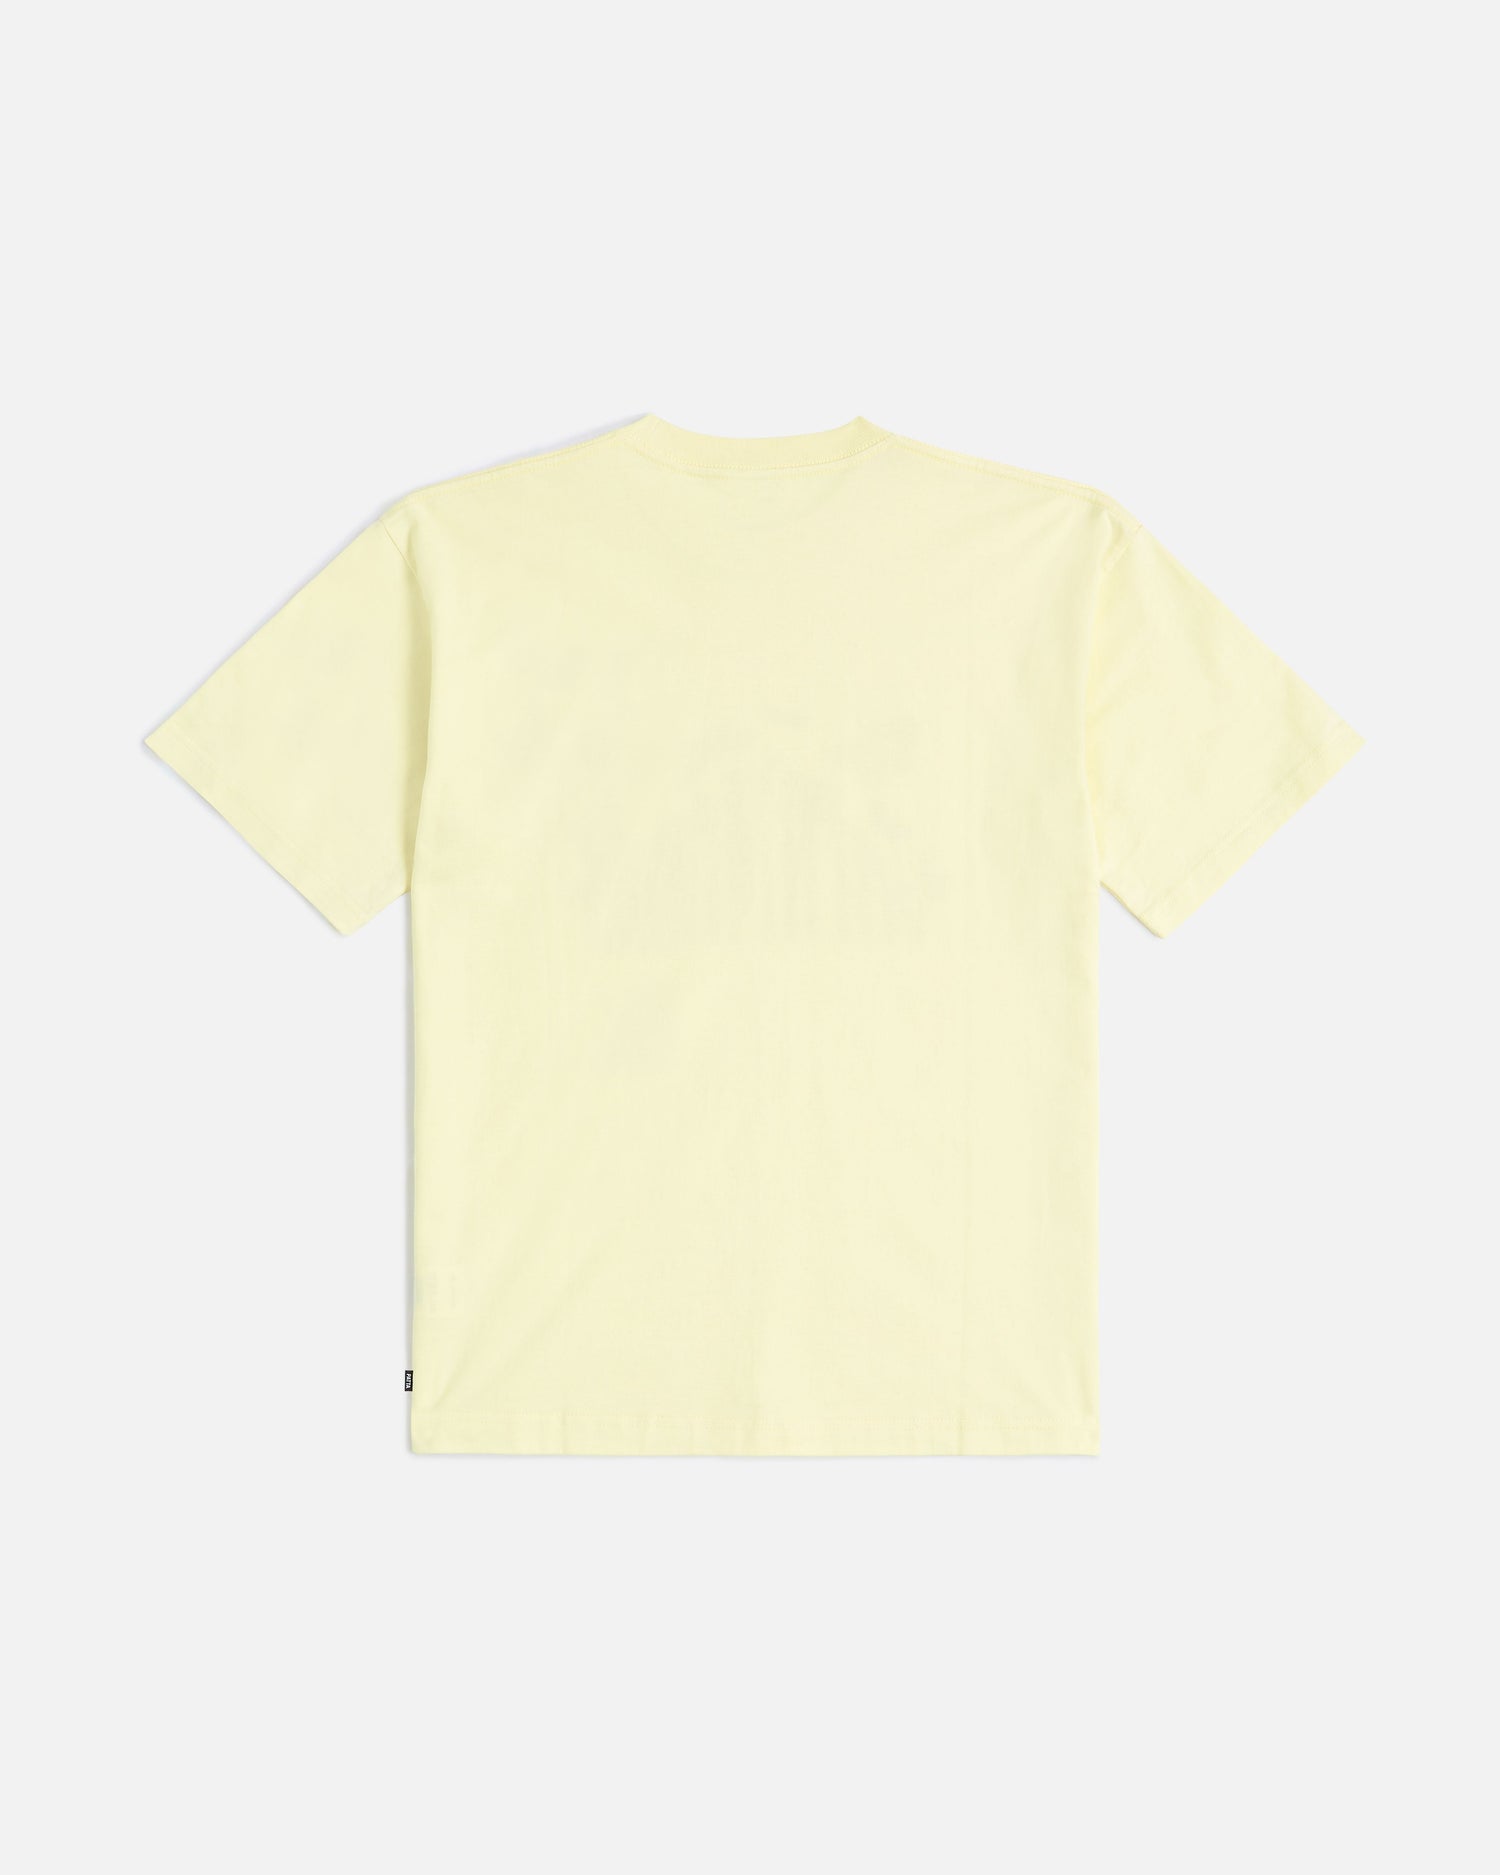 Patta Family T-Shirt (Wax Yellow)